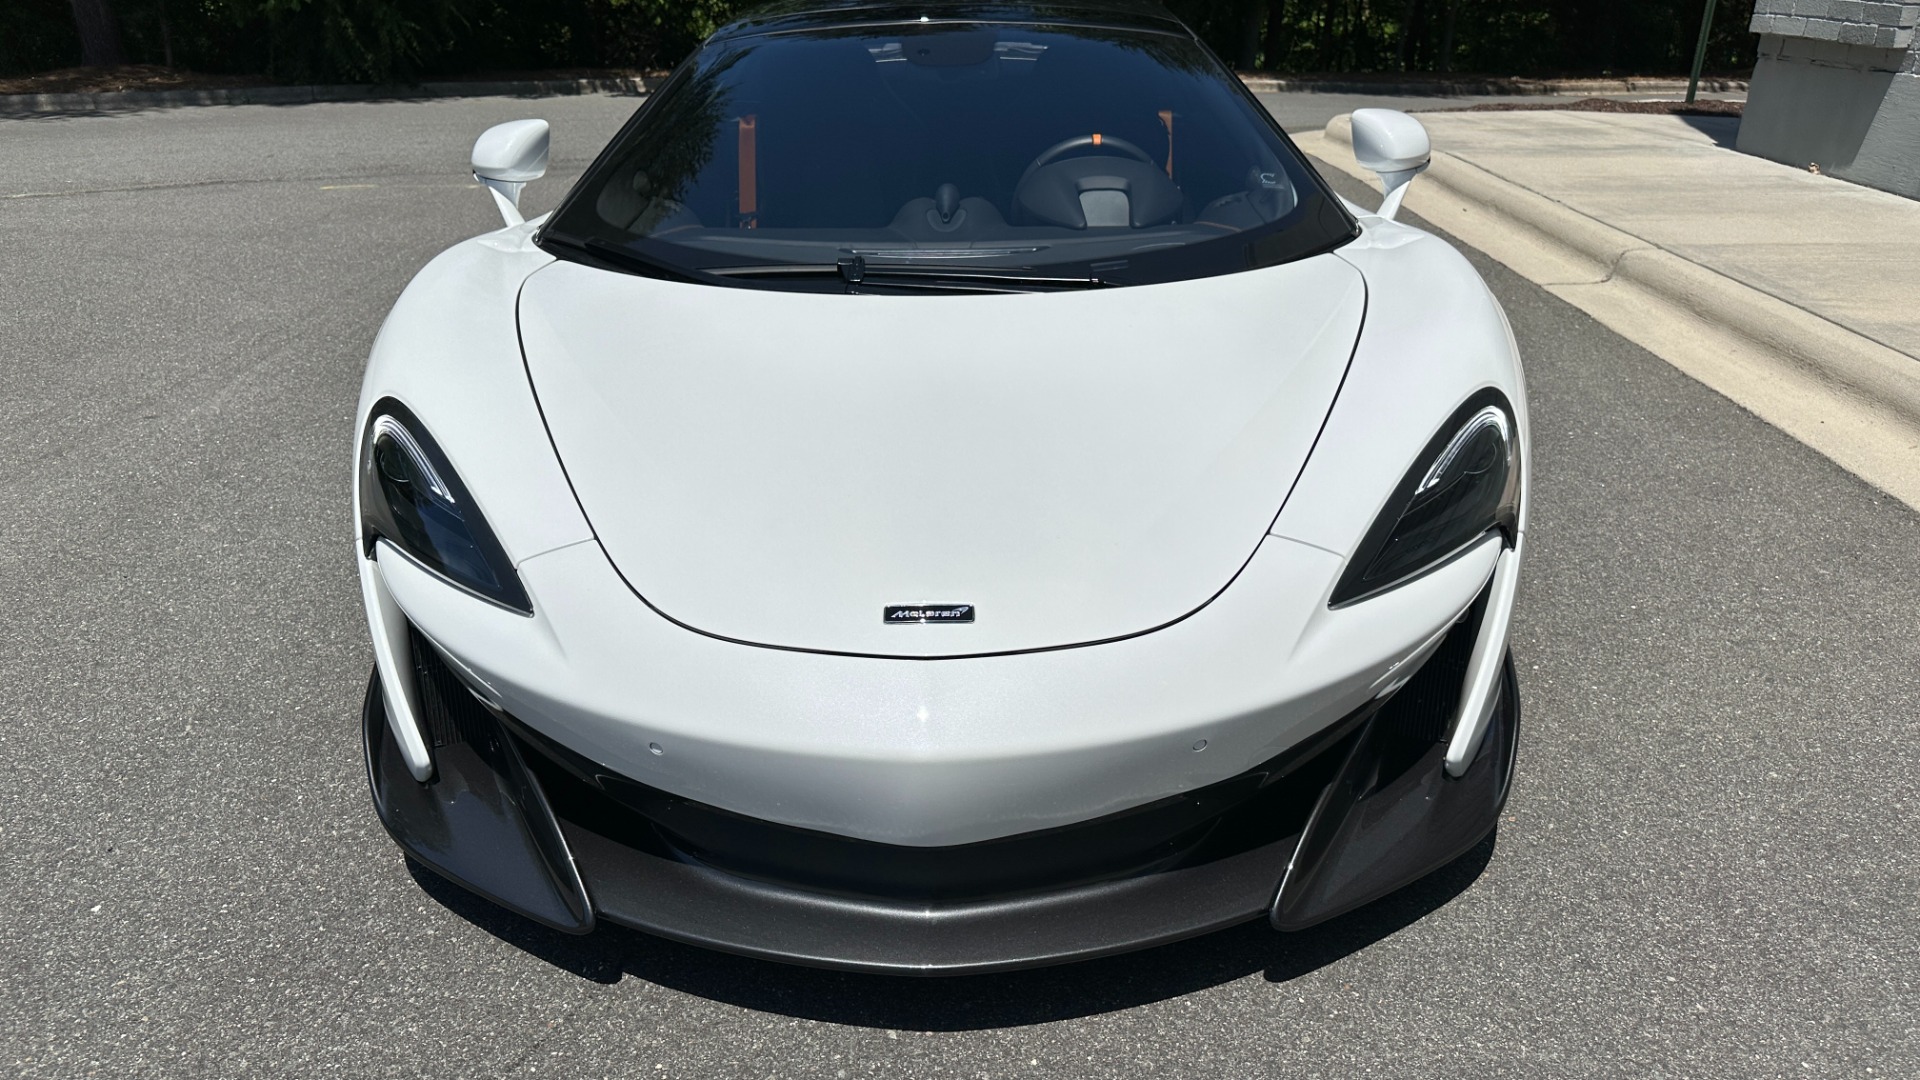 Used 2020 McLaren 600LT SPIDER / FRONT PPF / LEATHER INT / MSO BELTS / CARBON FIBER INT for sale $295,000 at Formula Imports in Charlotte NC 28227 9